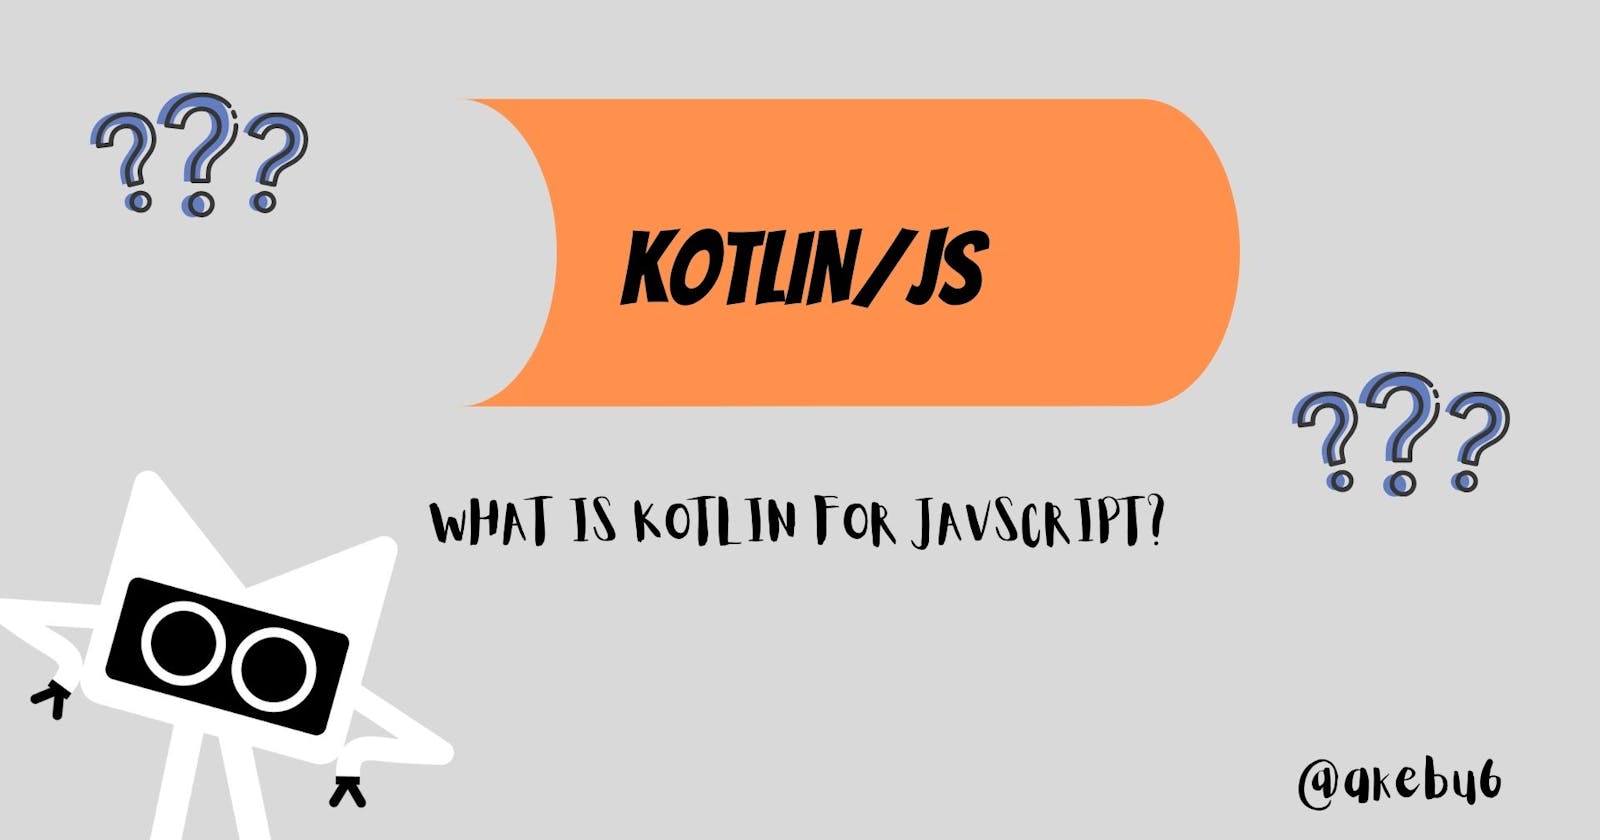 Kotlin/js